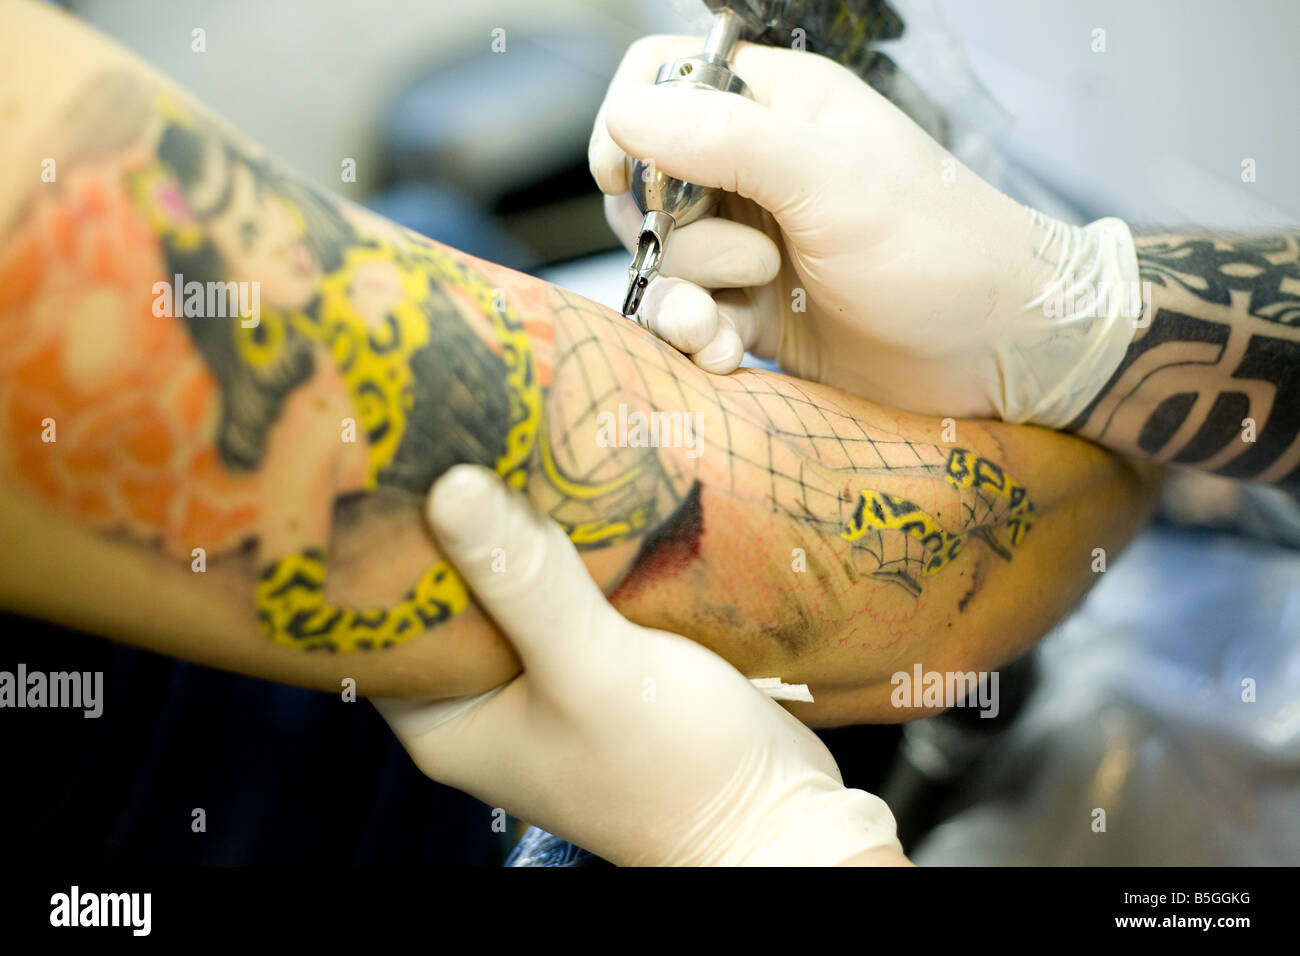 Man having his arm tattooed Stock Photo - Alamy